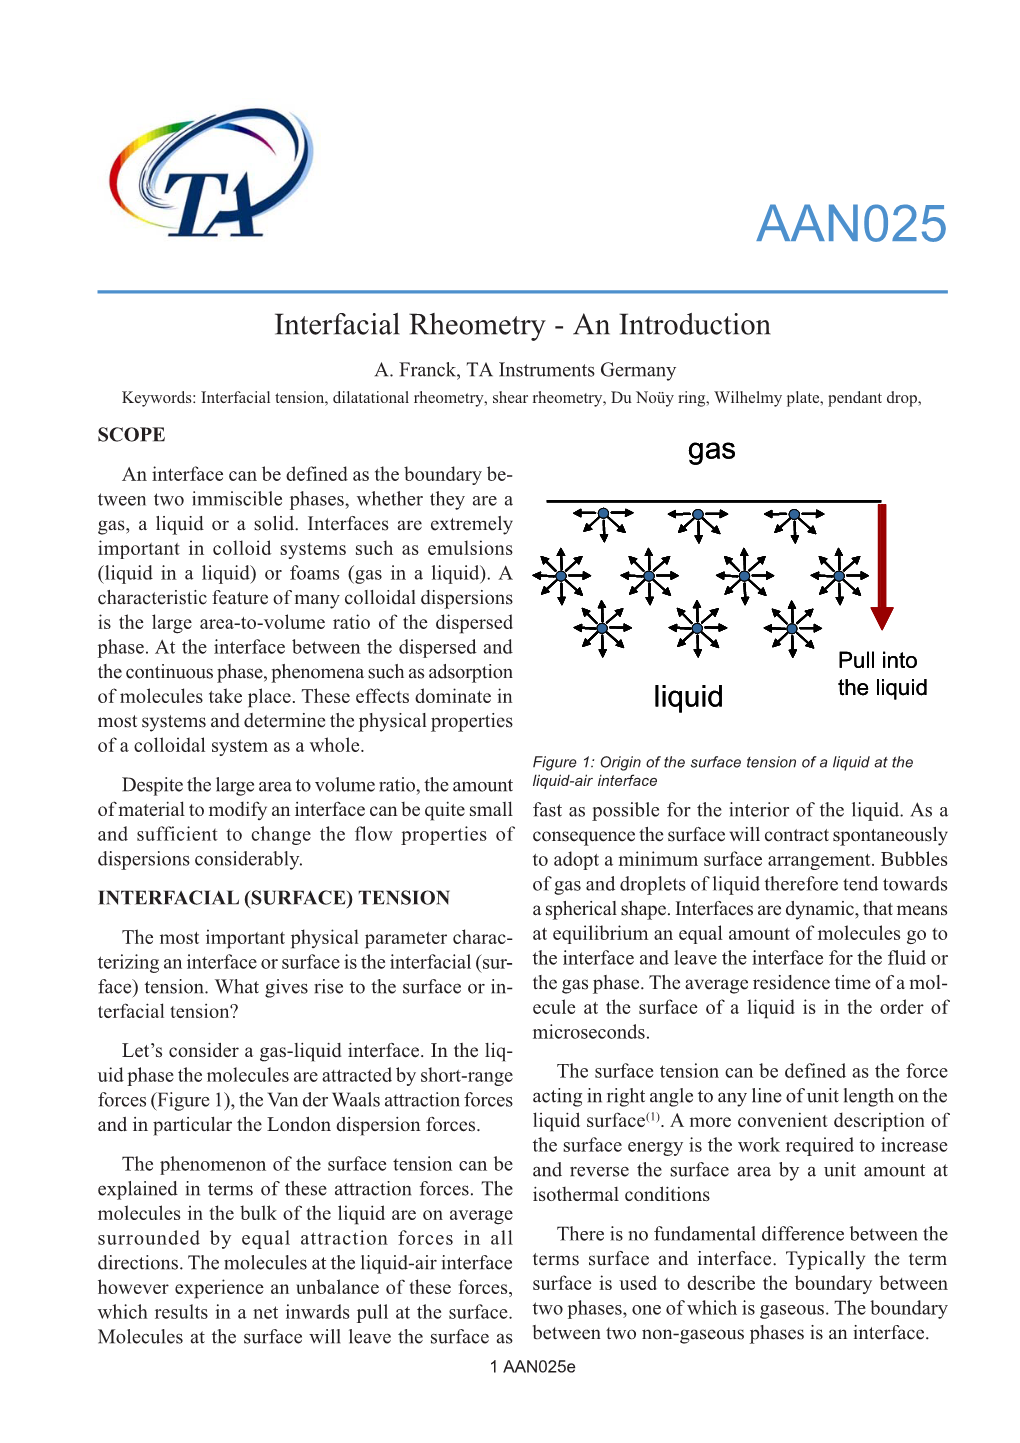 AAN025 V1 Interfacial Rheometry